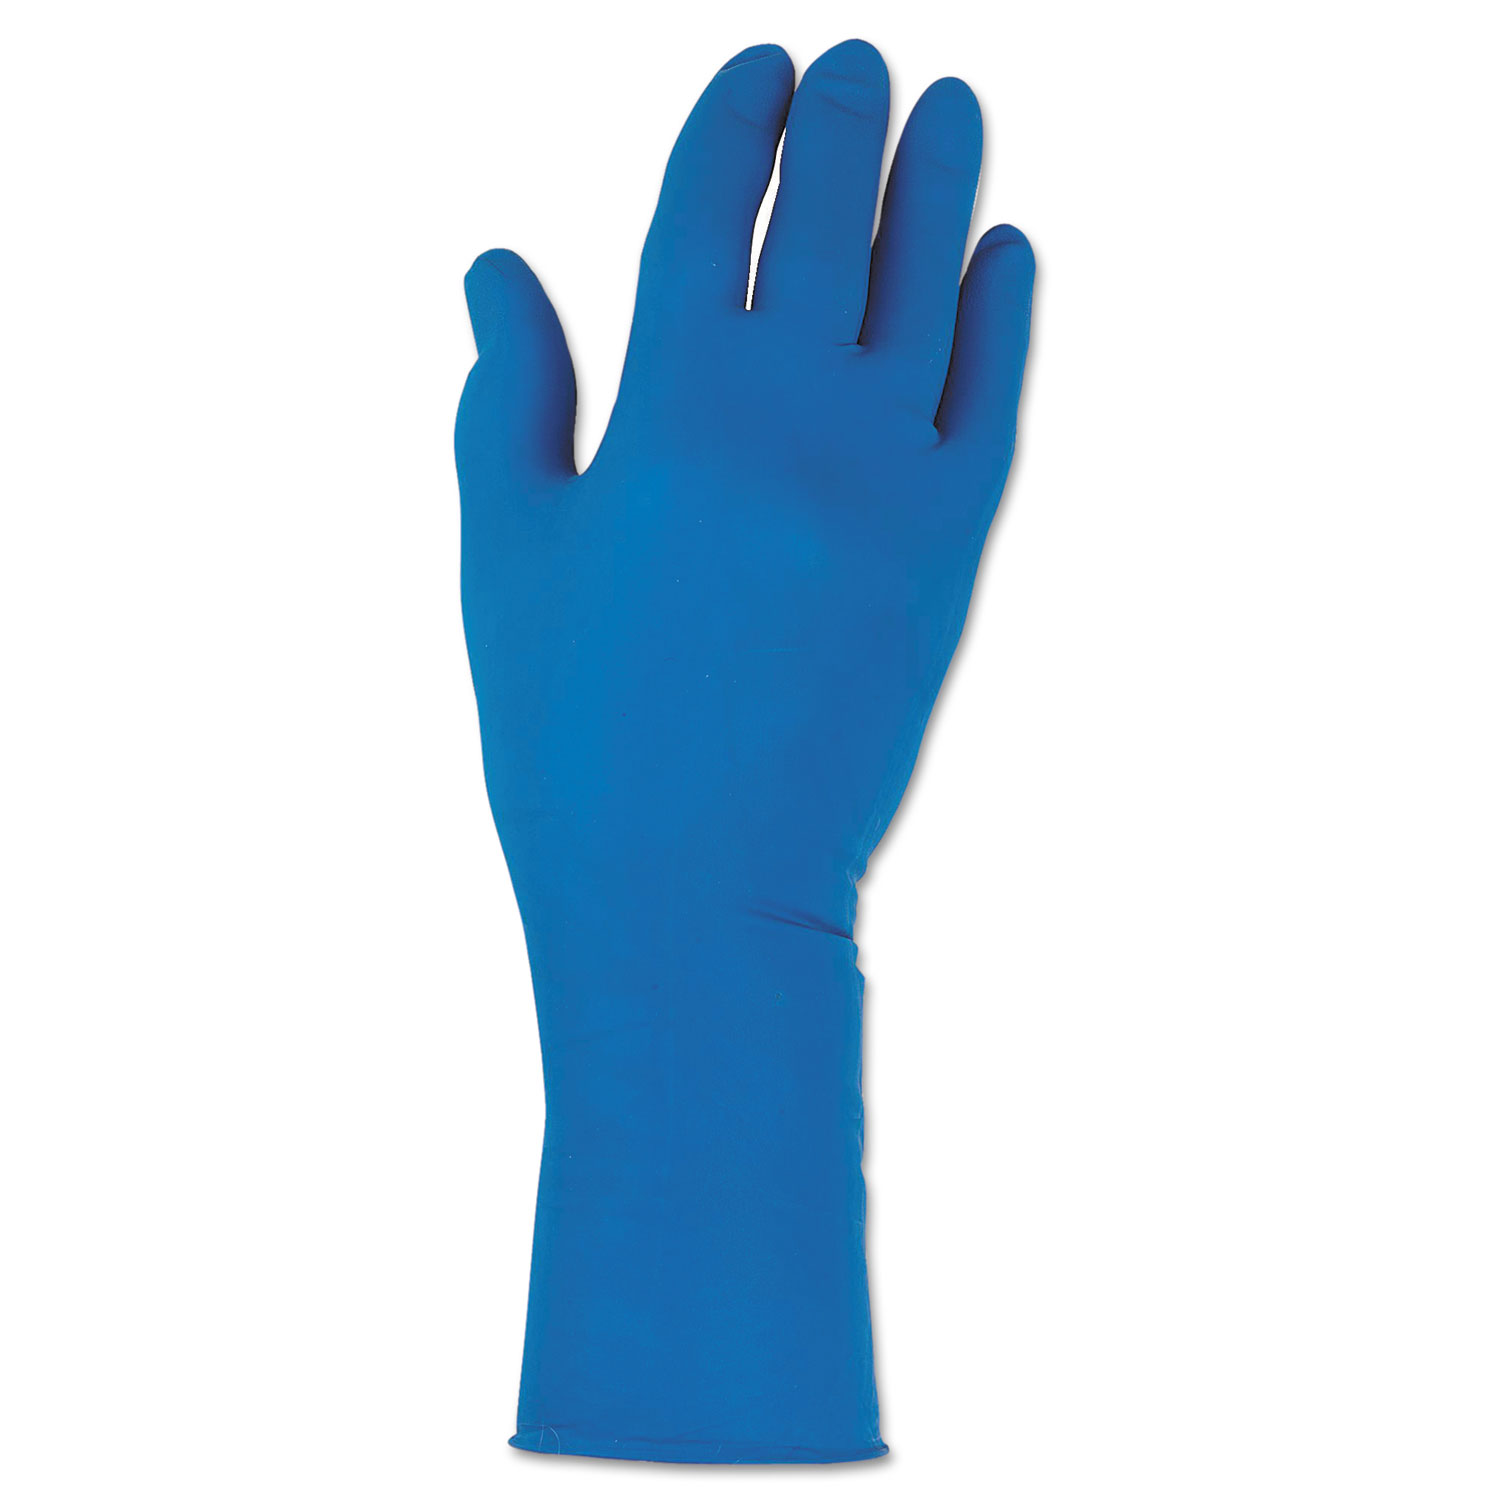  KleenGuard 49826 G29 Solvent Resistant Gloves, 295 mm Length, X-Large/Size 10, Blue, 500/Carton (KCC49826) 